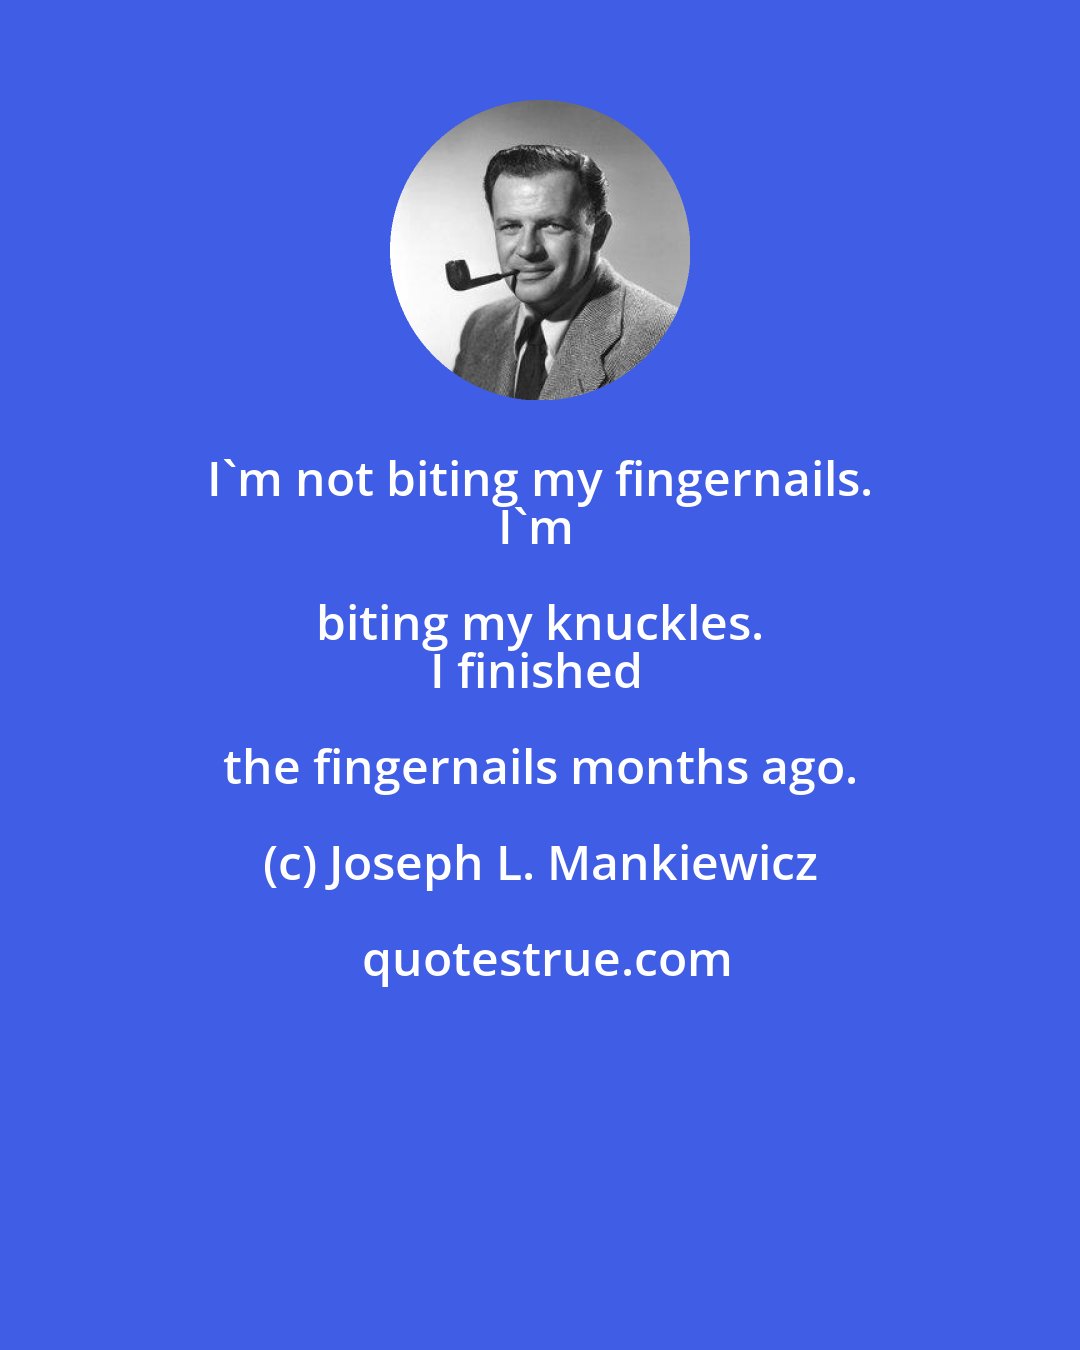 Joseph L. Mankiewicz: I'm not biting my fingernails. 
I'm biting my knuckles. 
I finished the fingernails months ago.